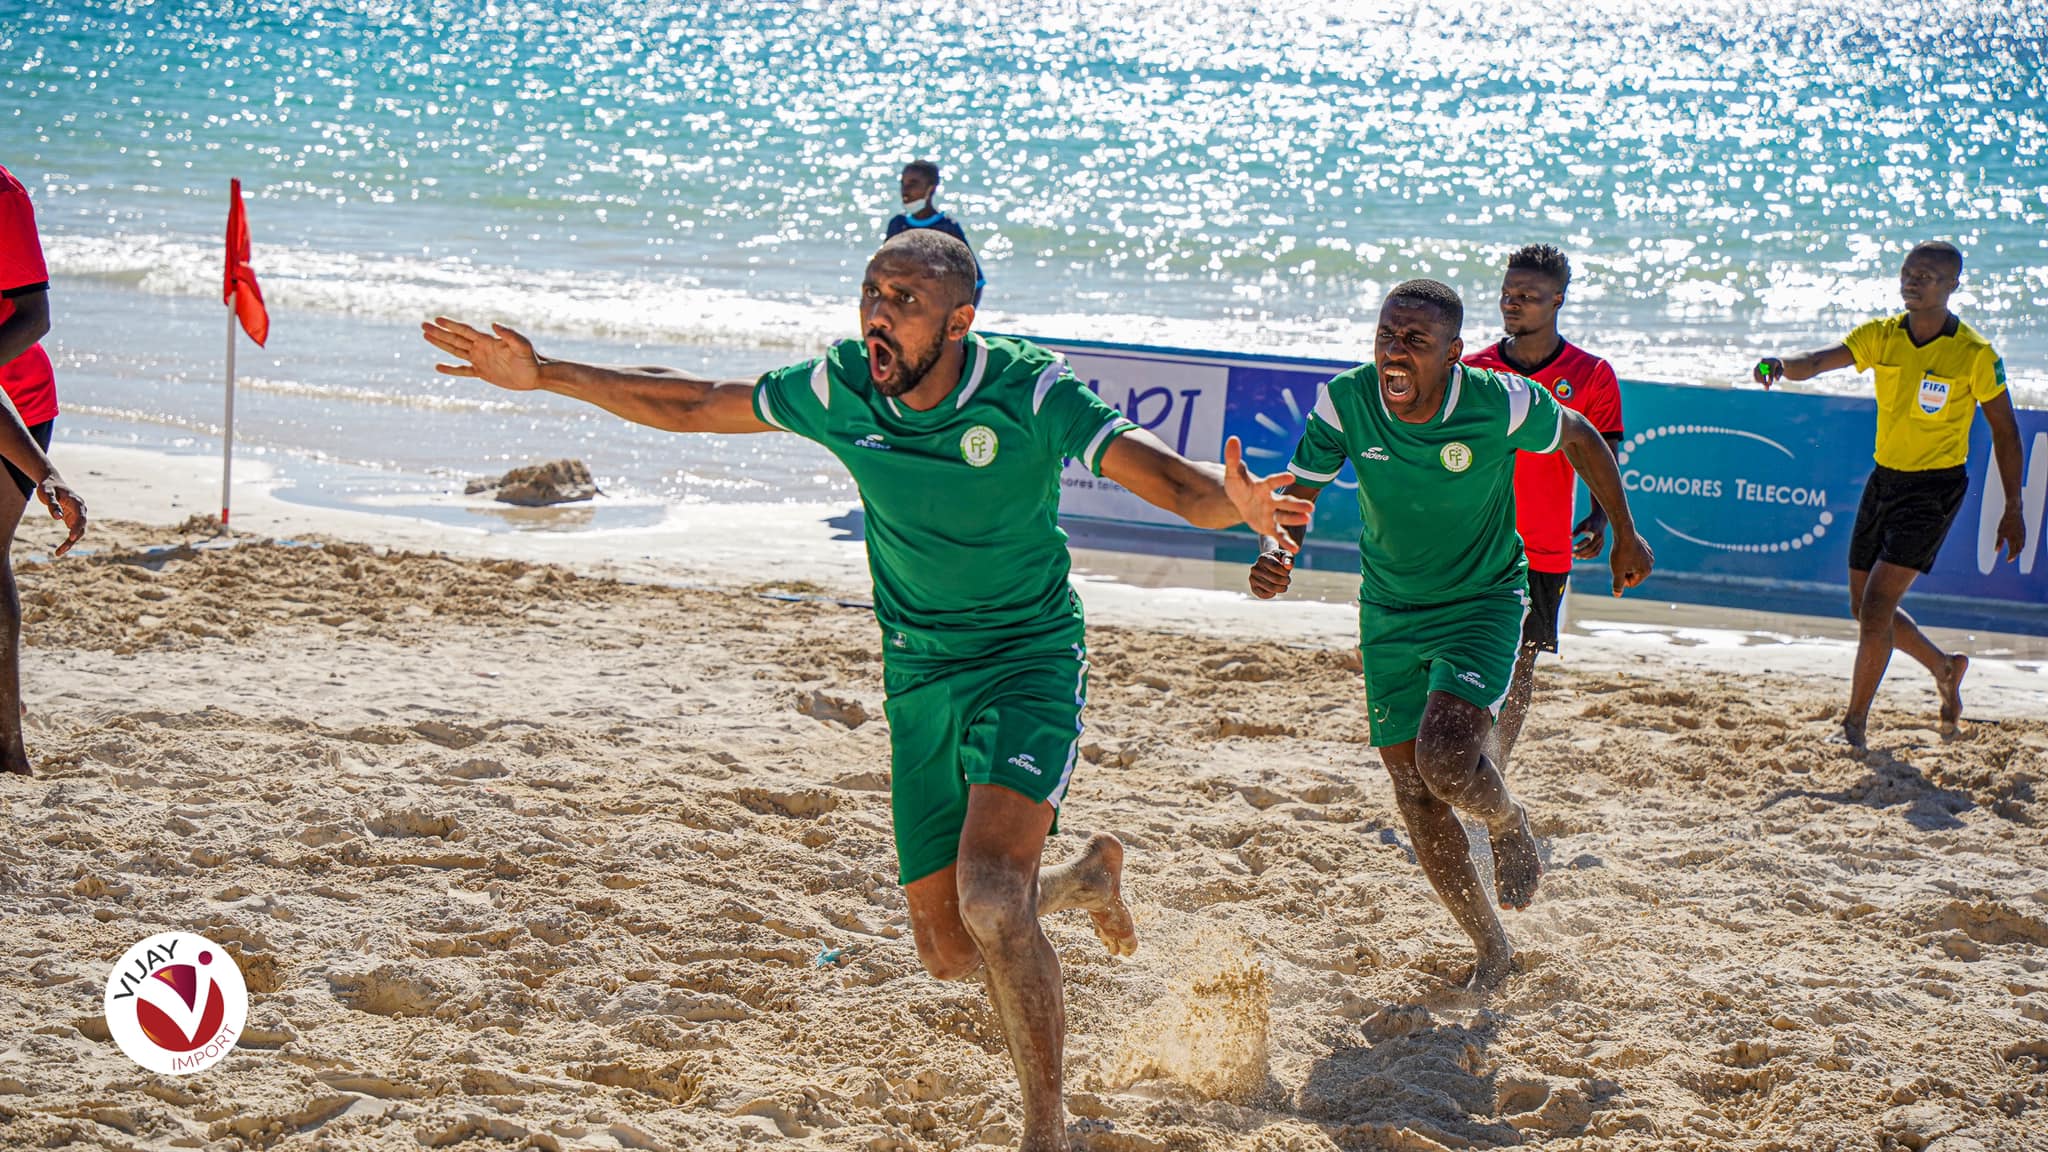 Comores, La liste des Comores contre la France beach soccer, Comoros Football 269 | Portail du football des Comores